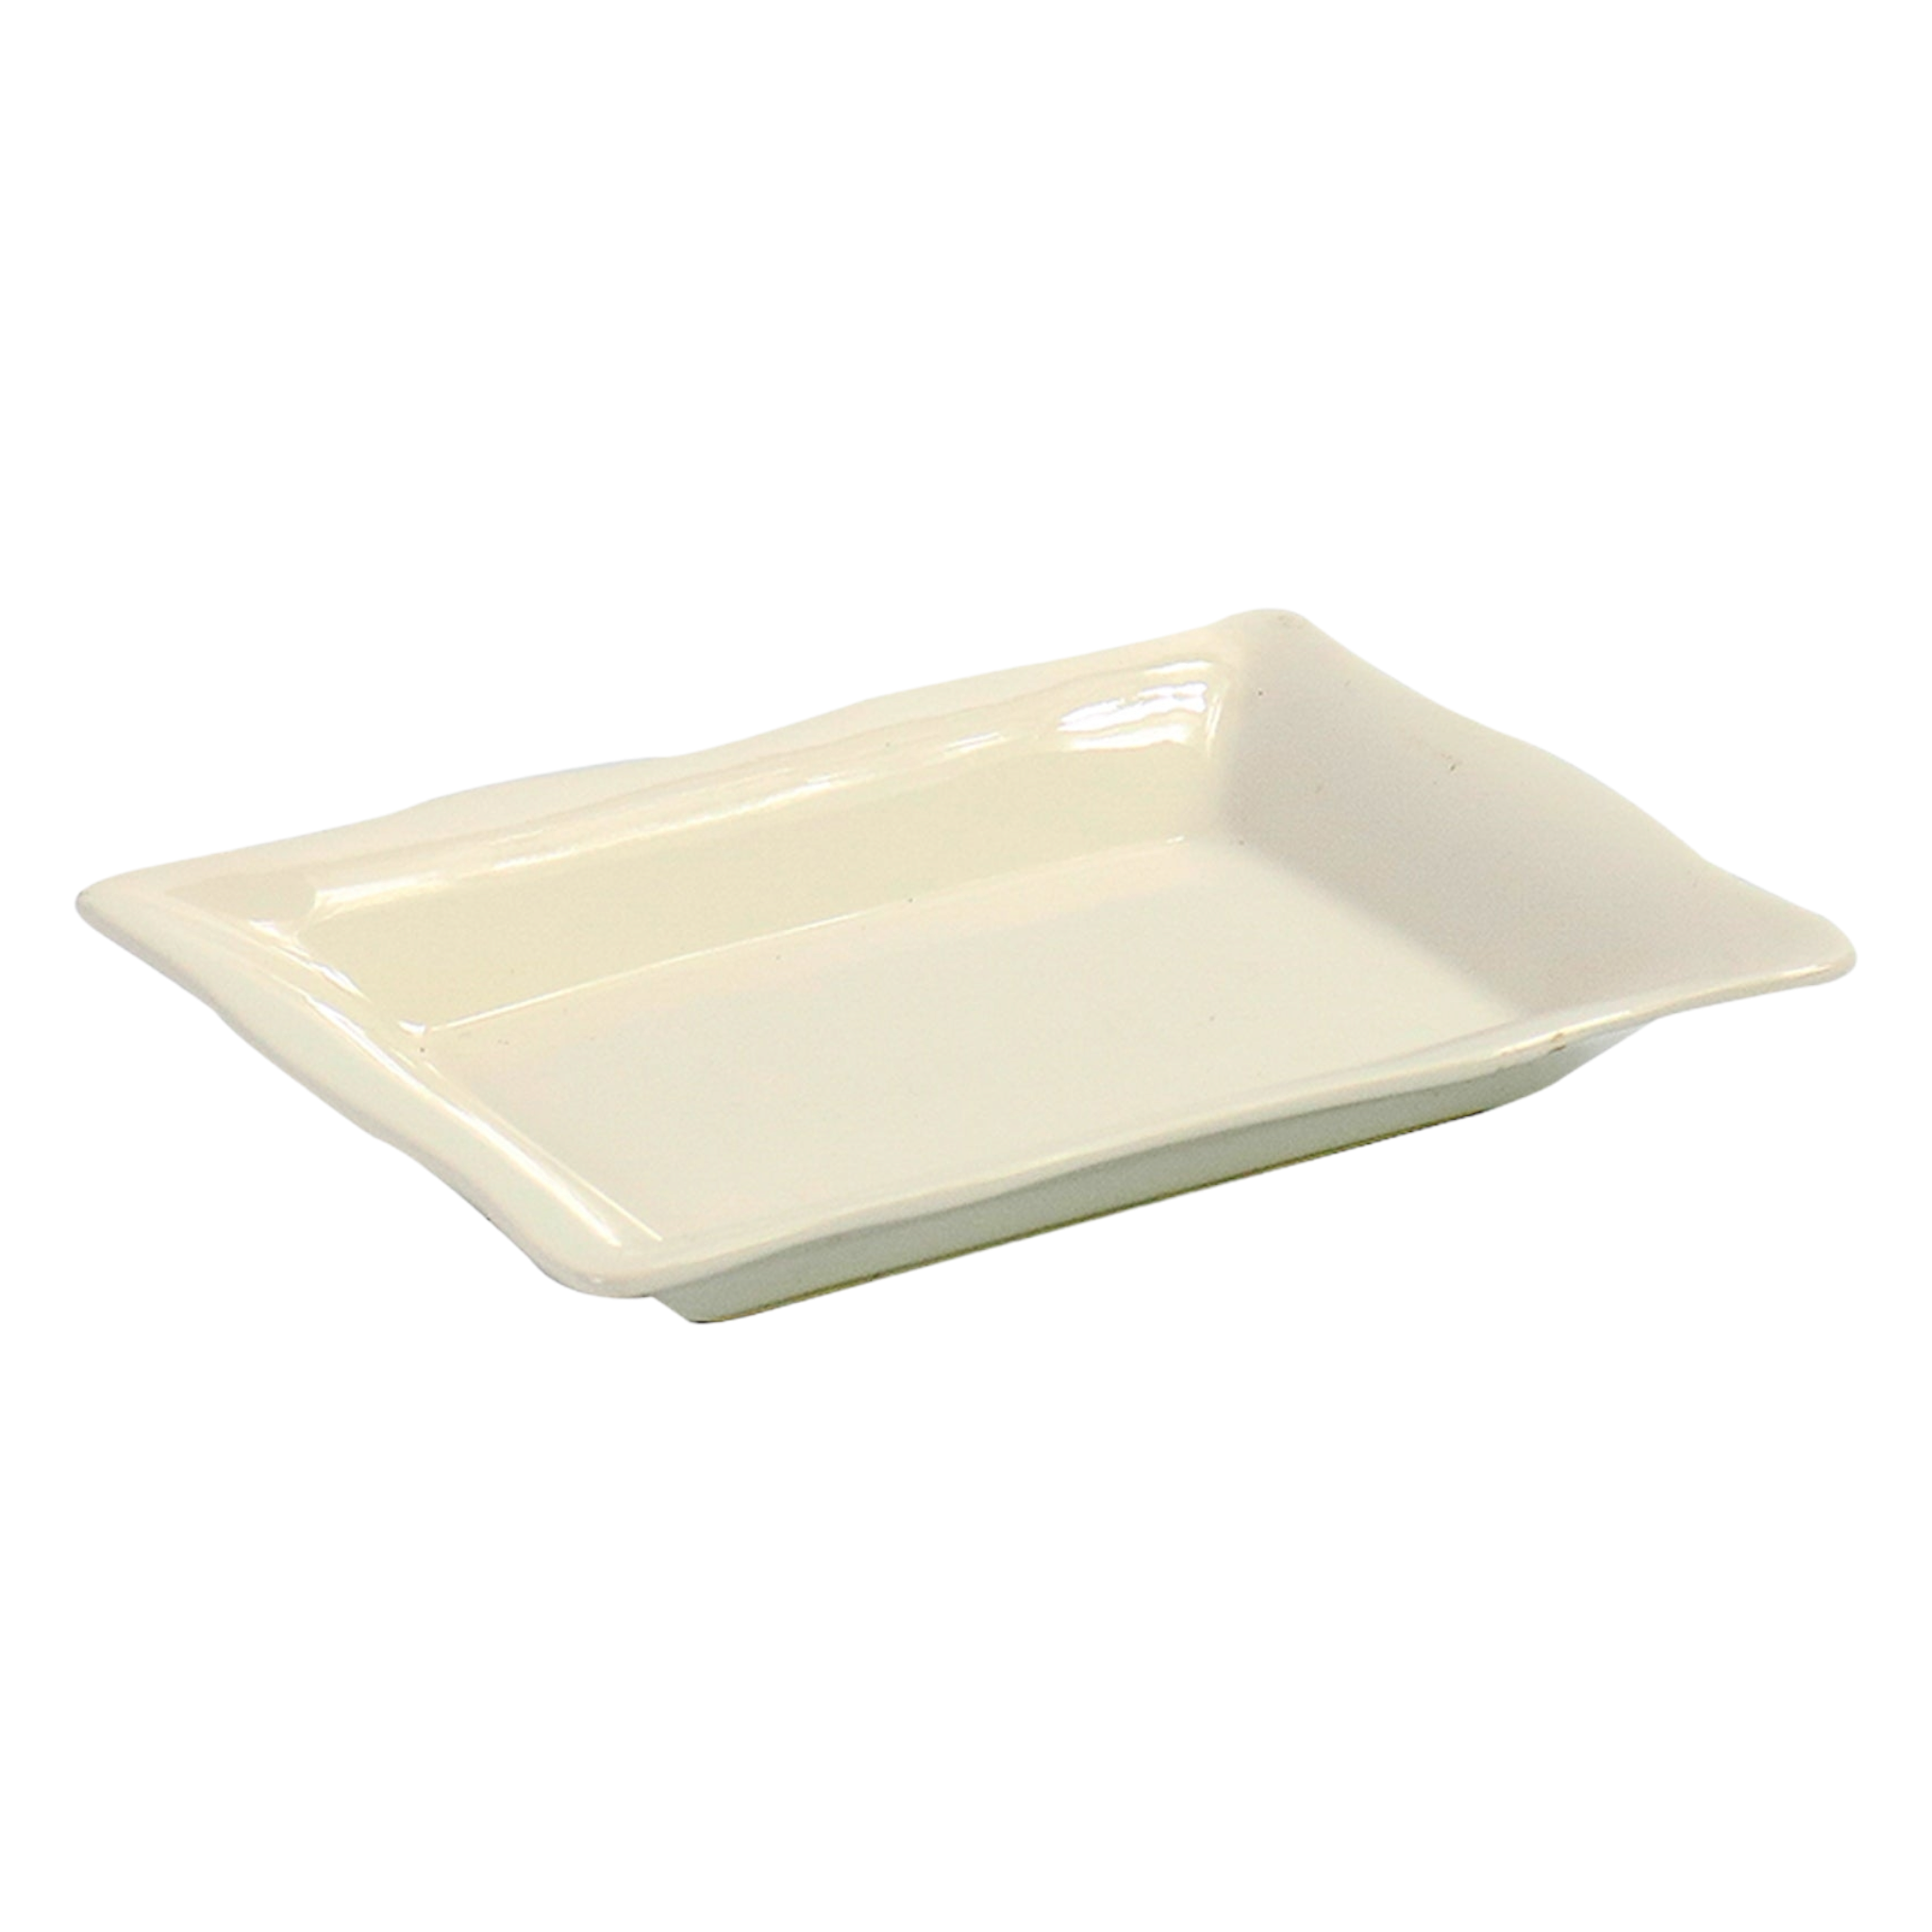 Ceramic Dinner Plate 19.5x13.5x3cm